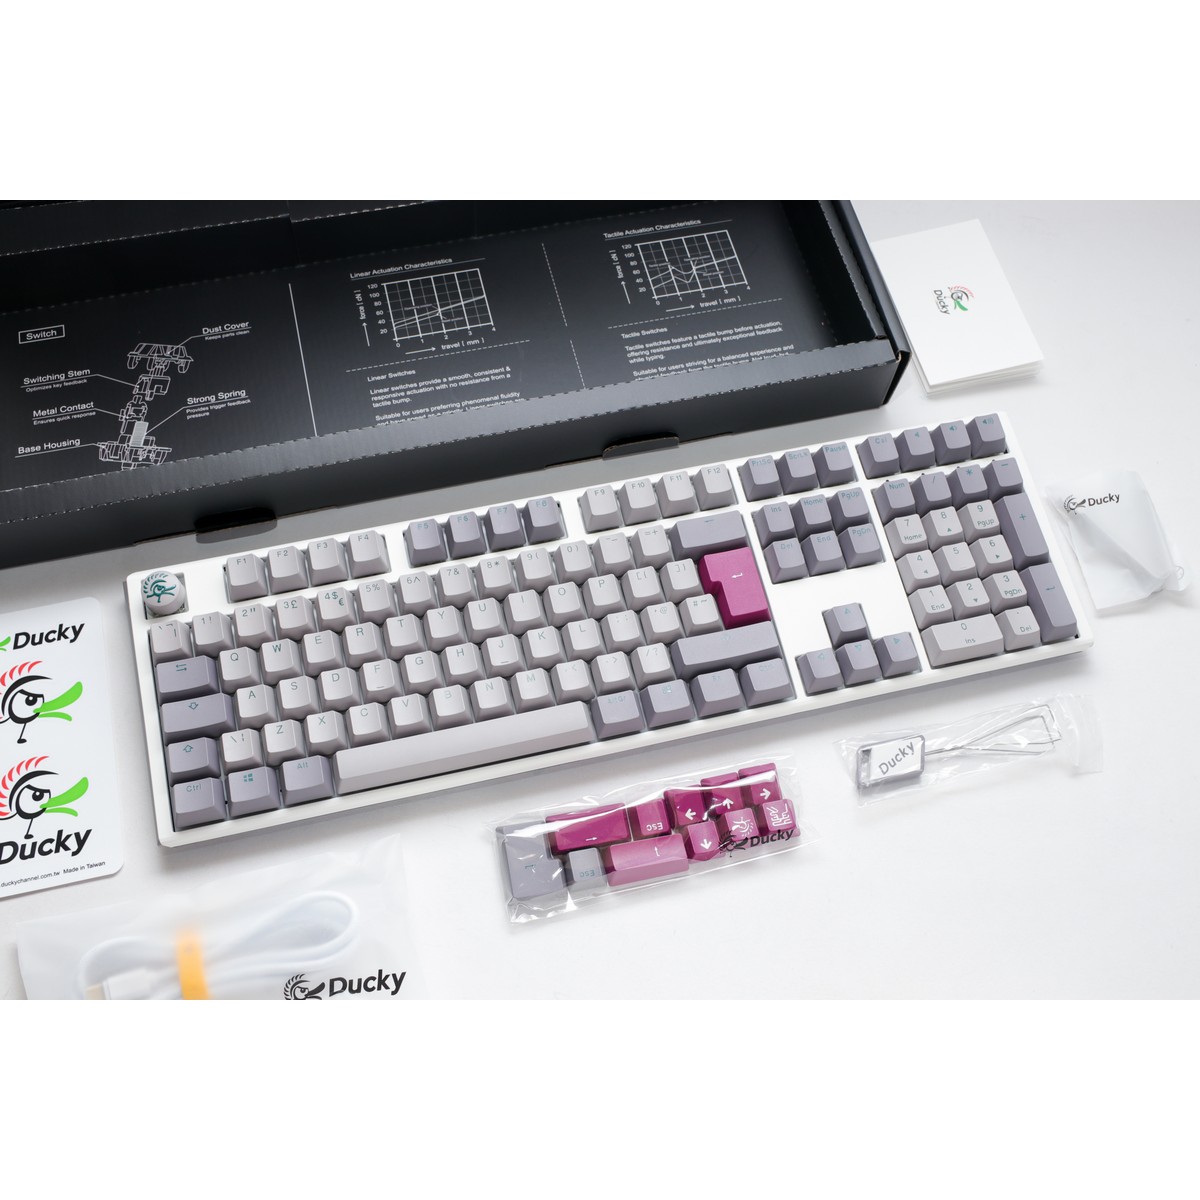 Ducky - Ducky One 3 Mist USB RGB Mechanical Gaming Keyboard Cherry MX Blue Switch - UK Layout